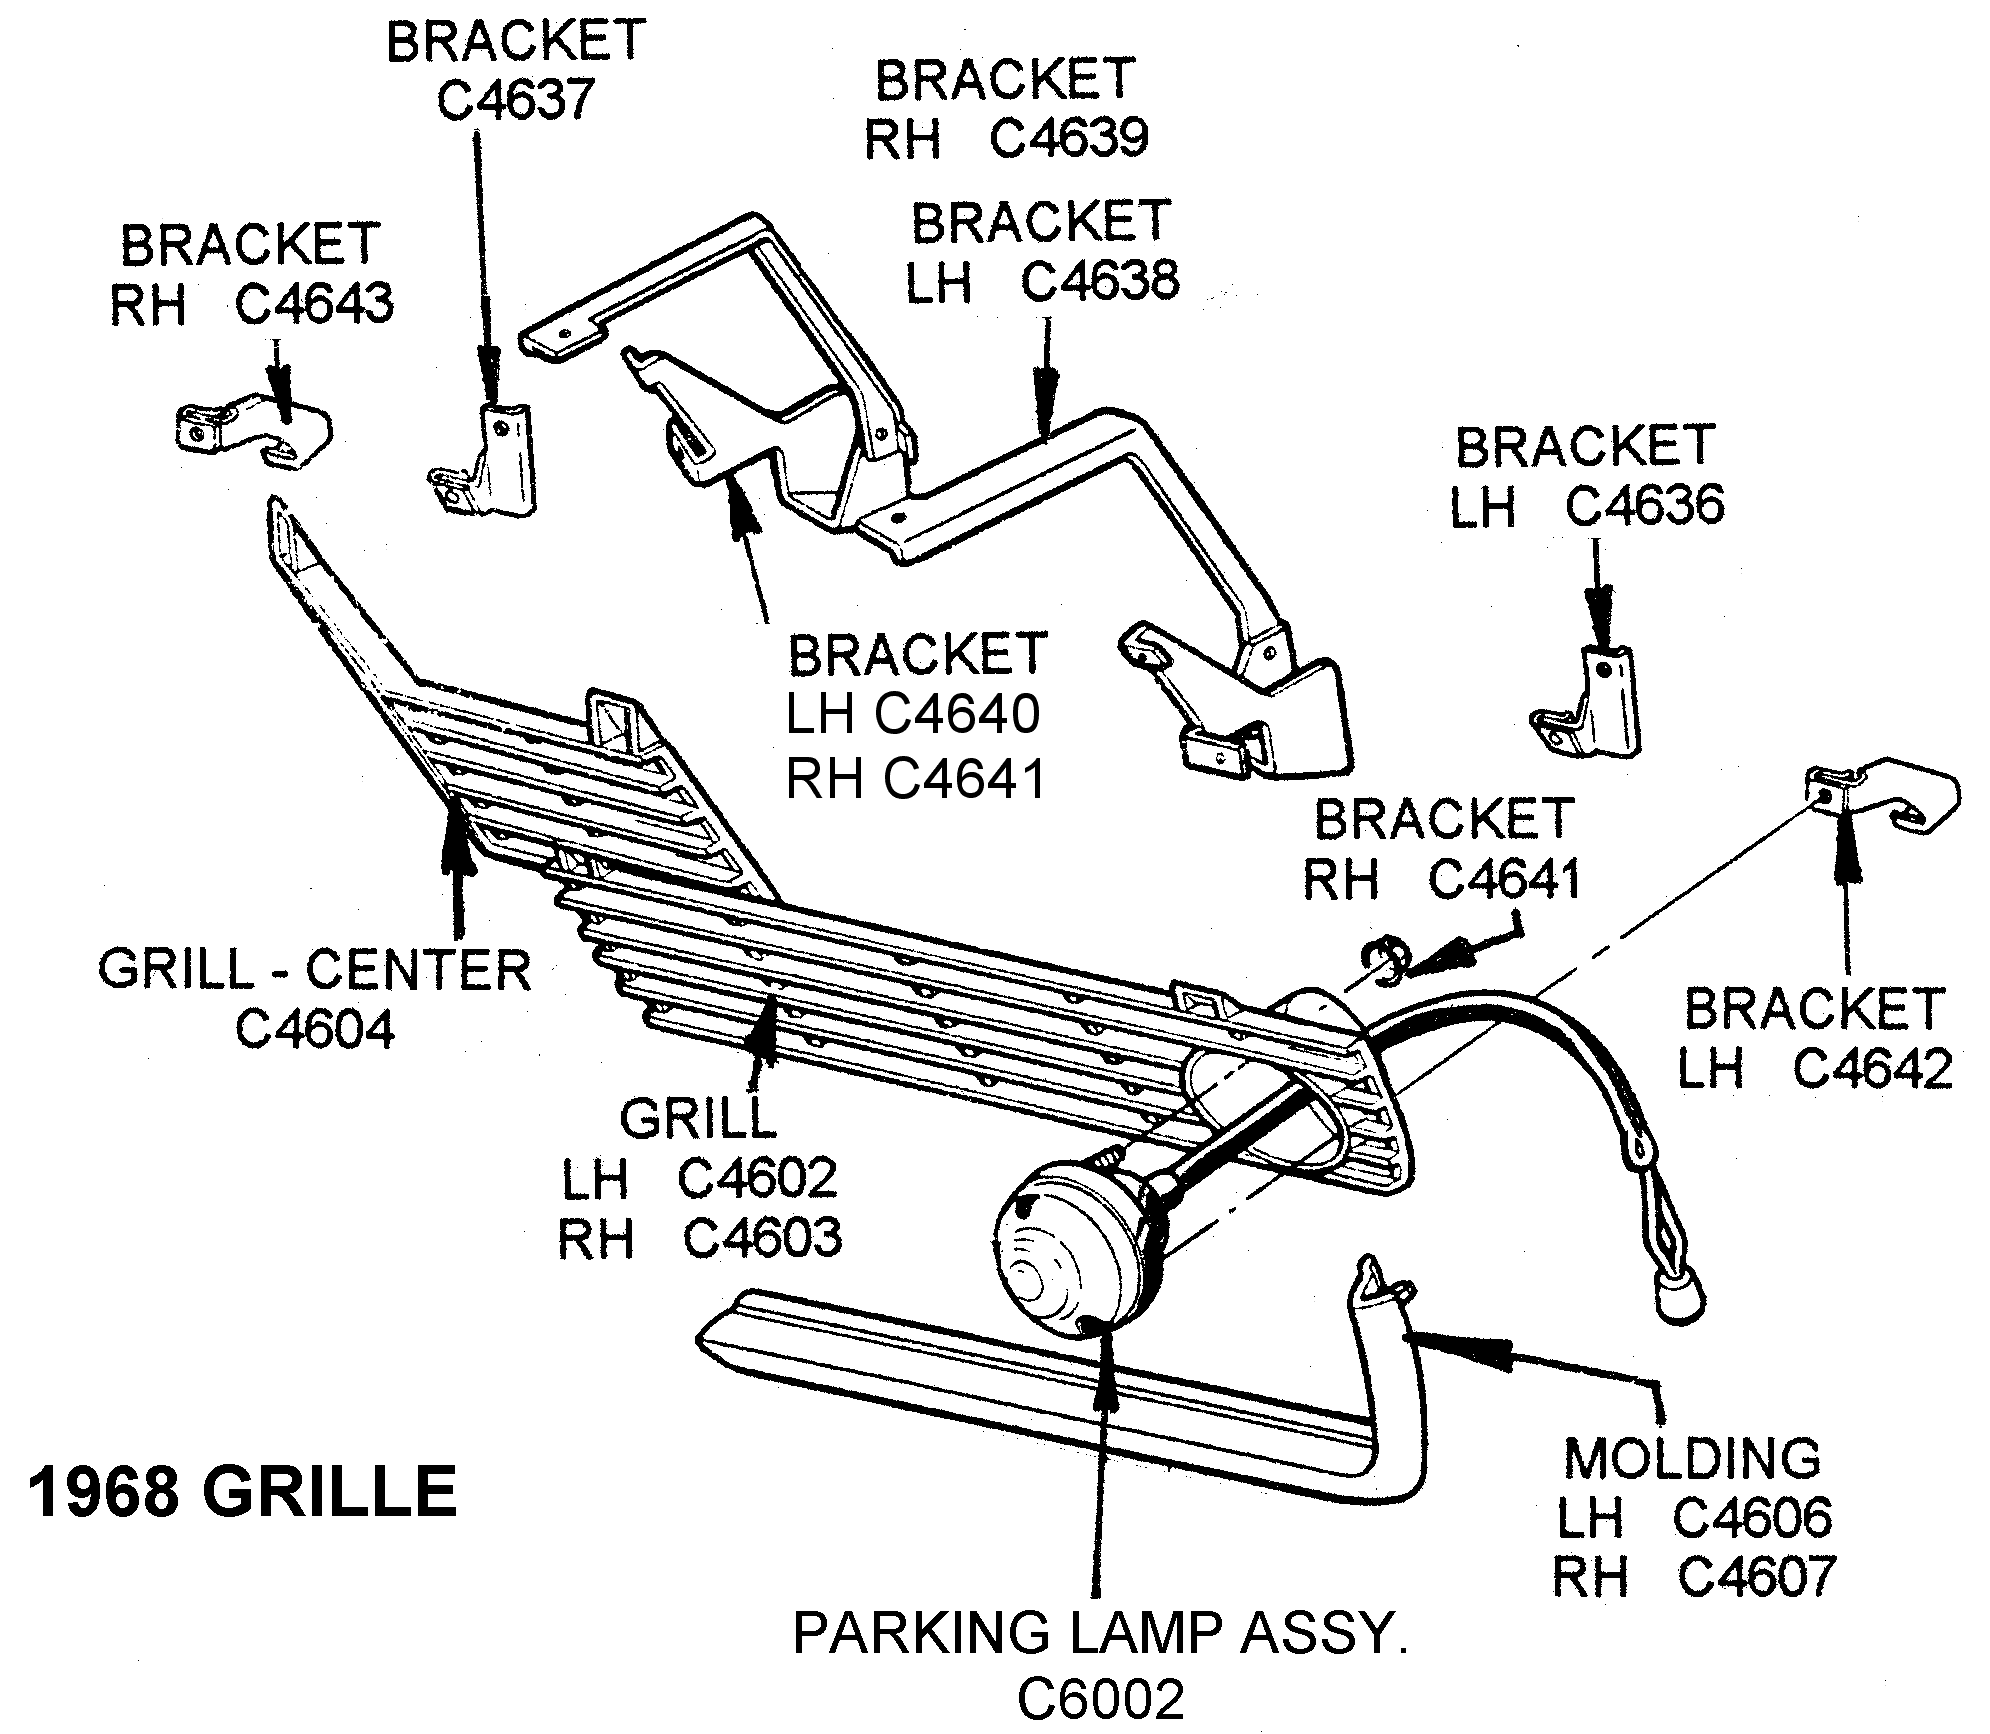 1968 Grille Diagram View Chicago Corvette Supply